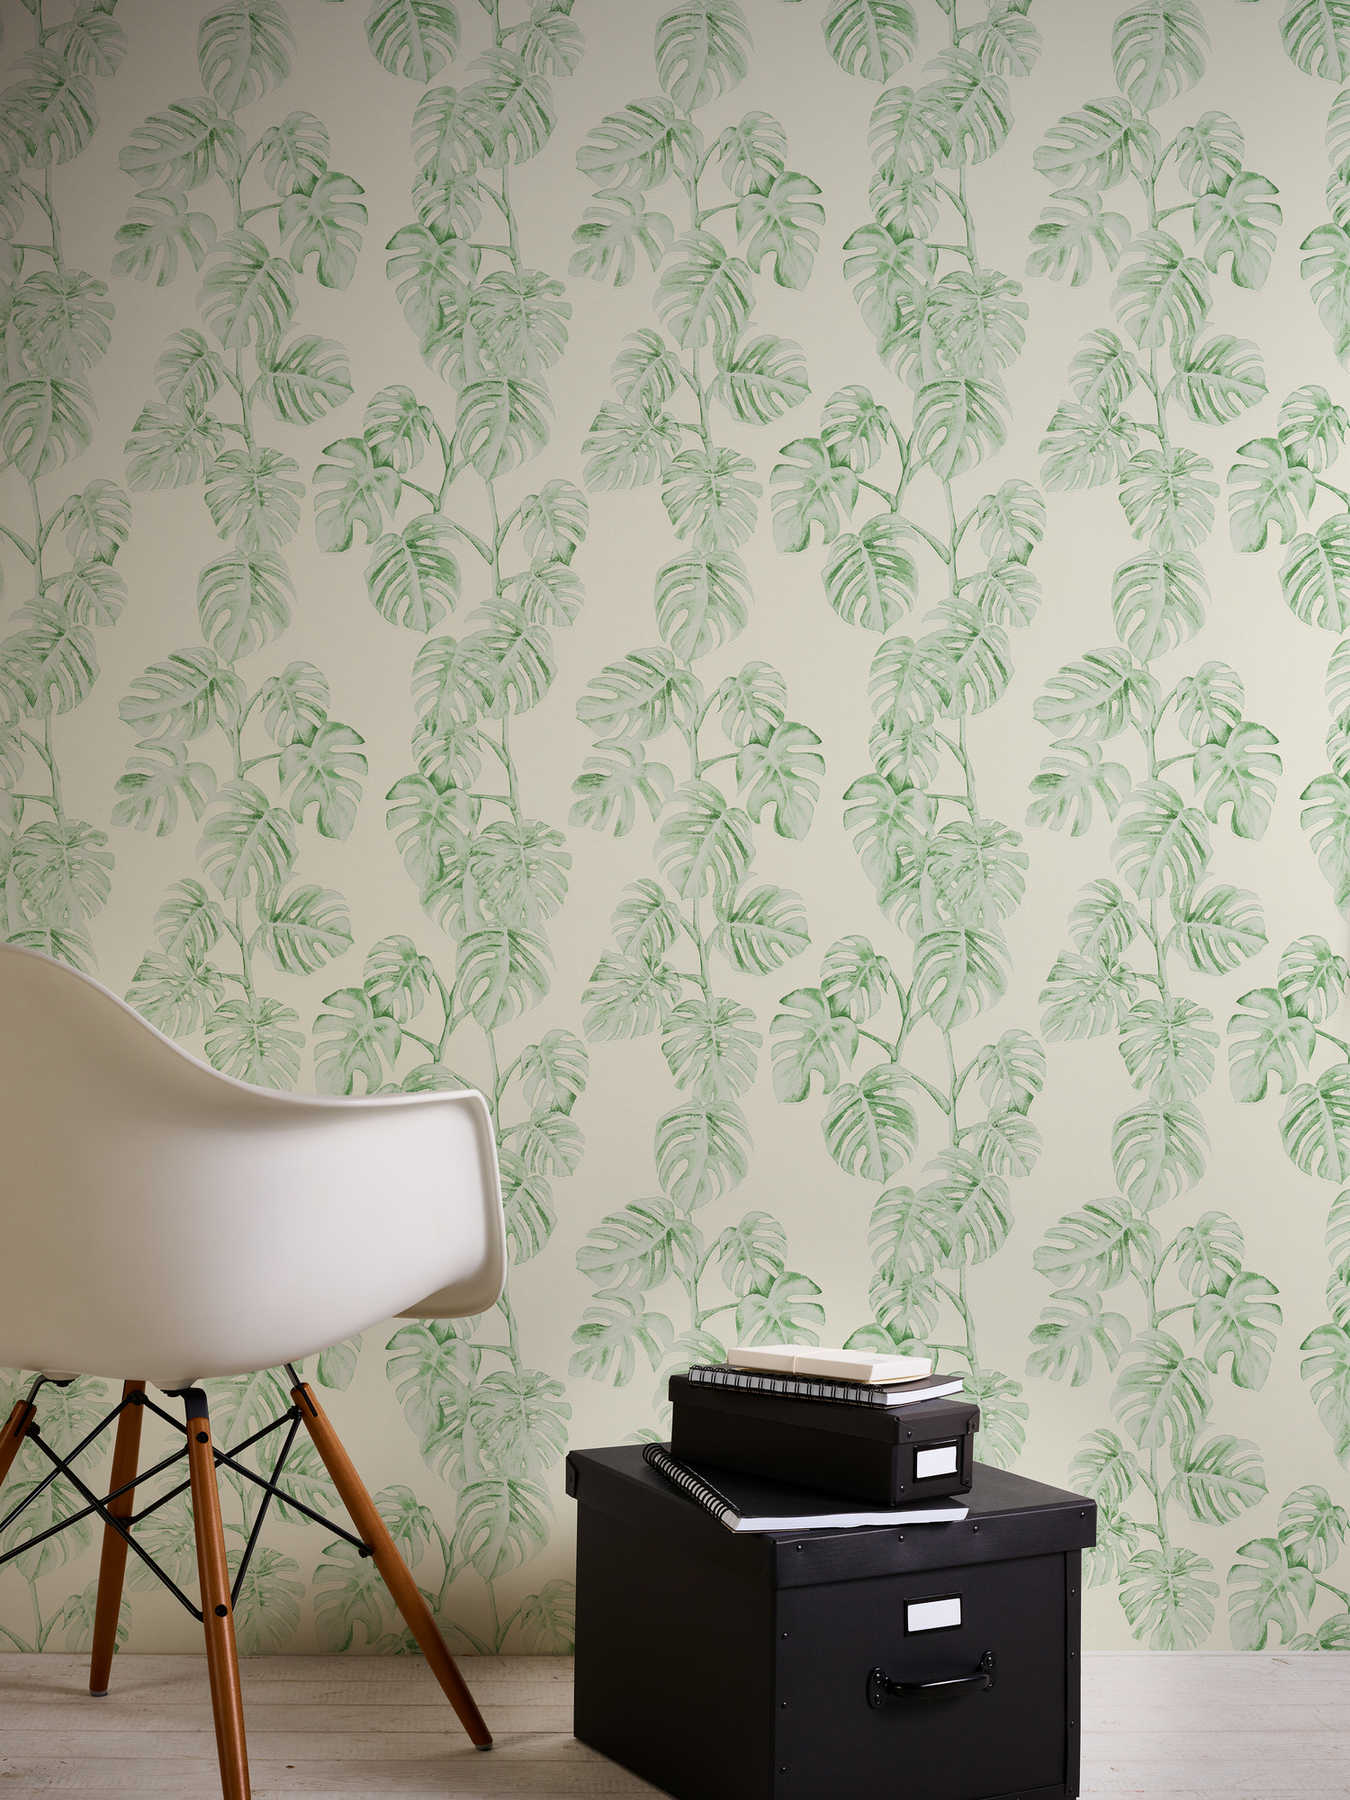             Papier peint intissé vrilles de monstera, motif naturel - vert, blanc
        